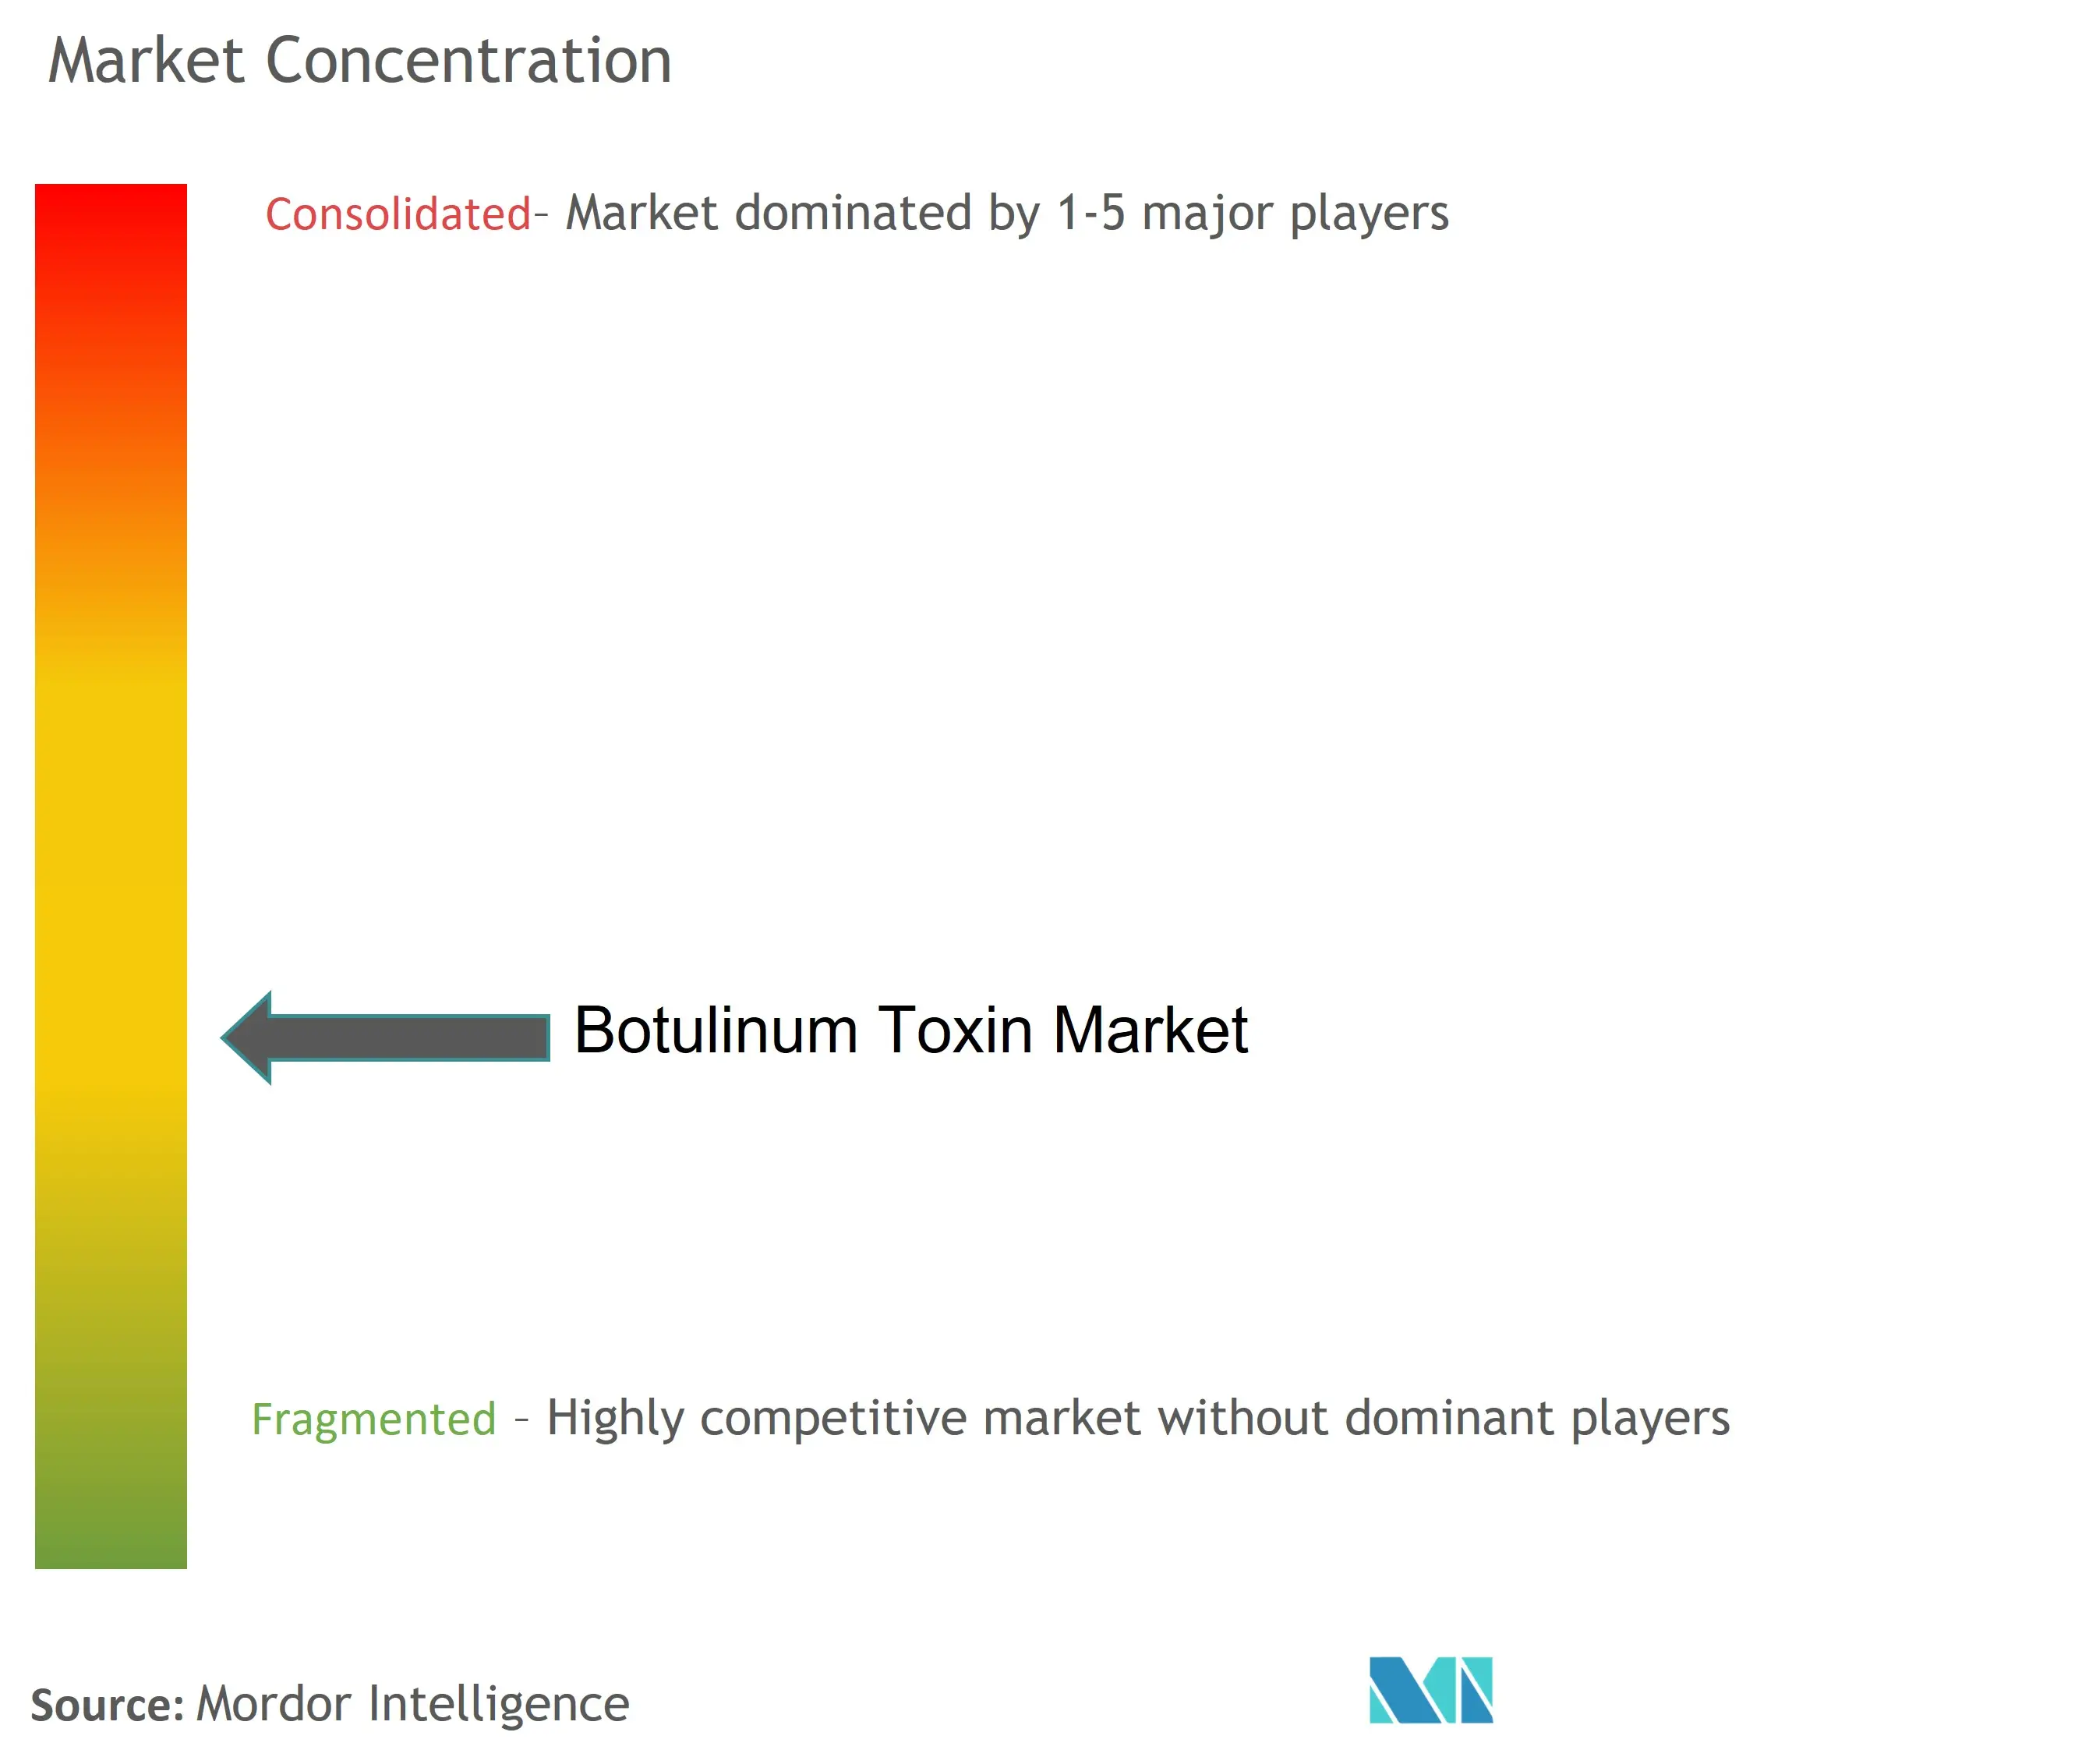 Botulinum Toxin Market Concentration